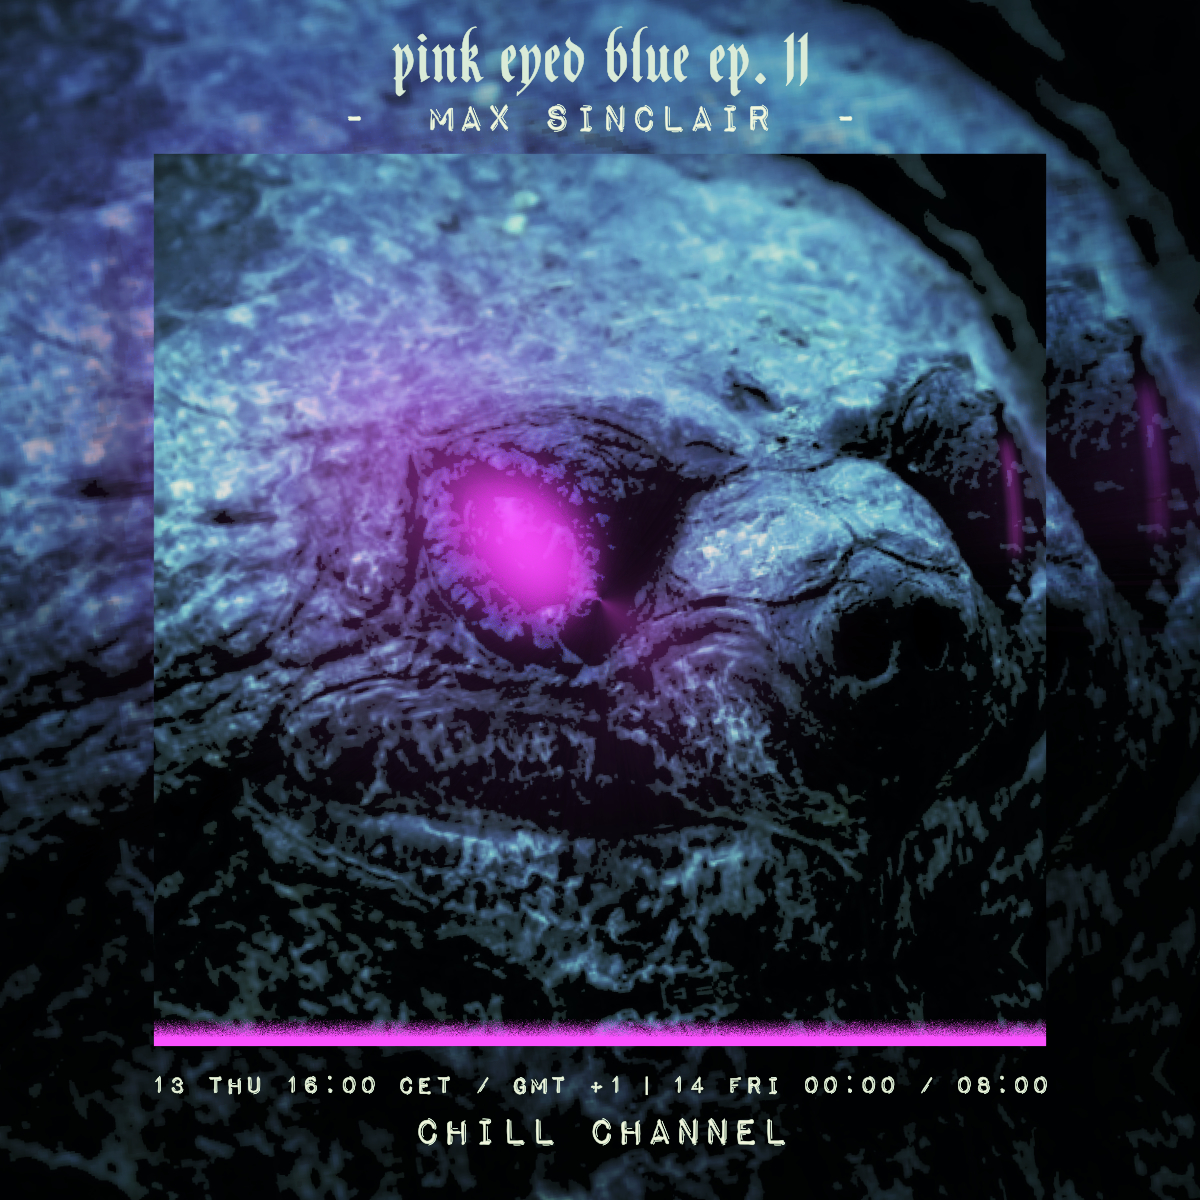 Crimson presents Pink Eyed Blue Ep. 11 - MAX SINCLAIR